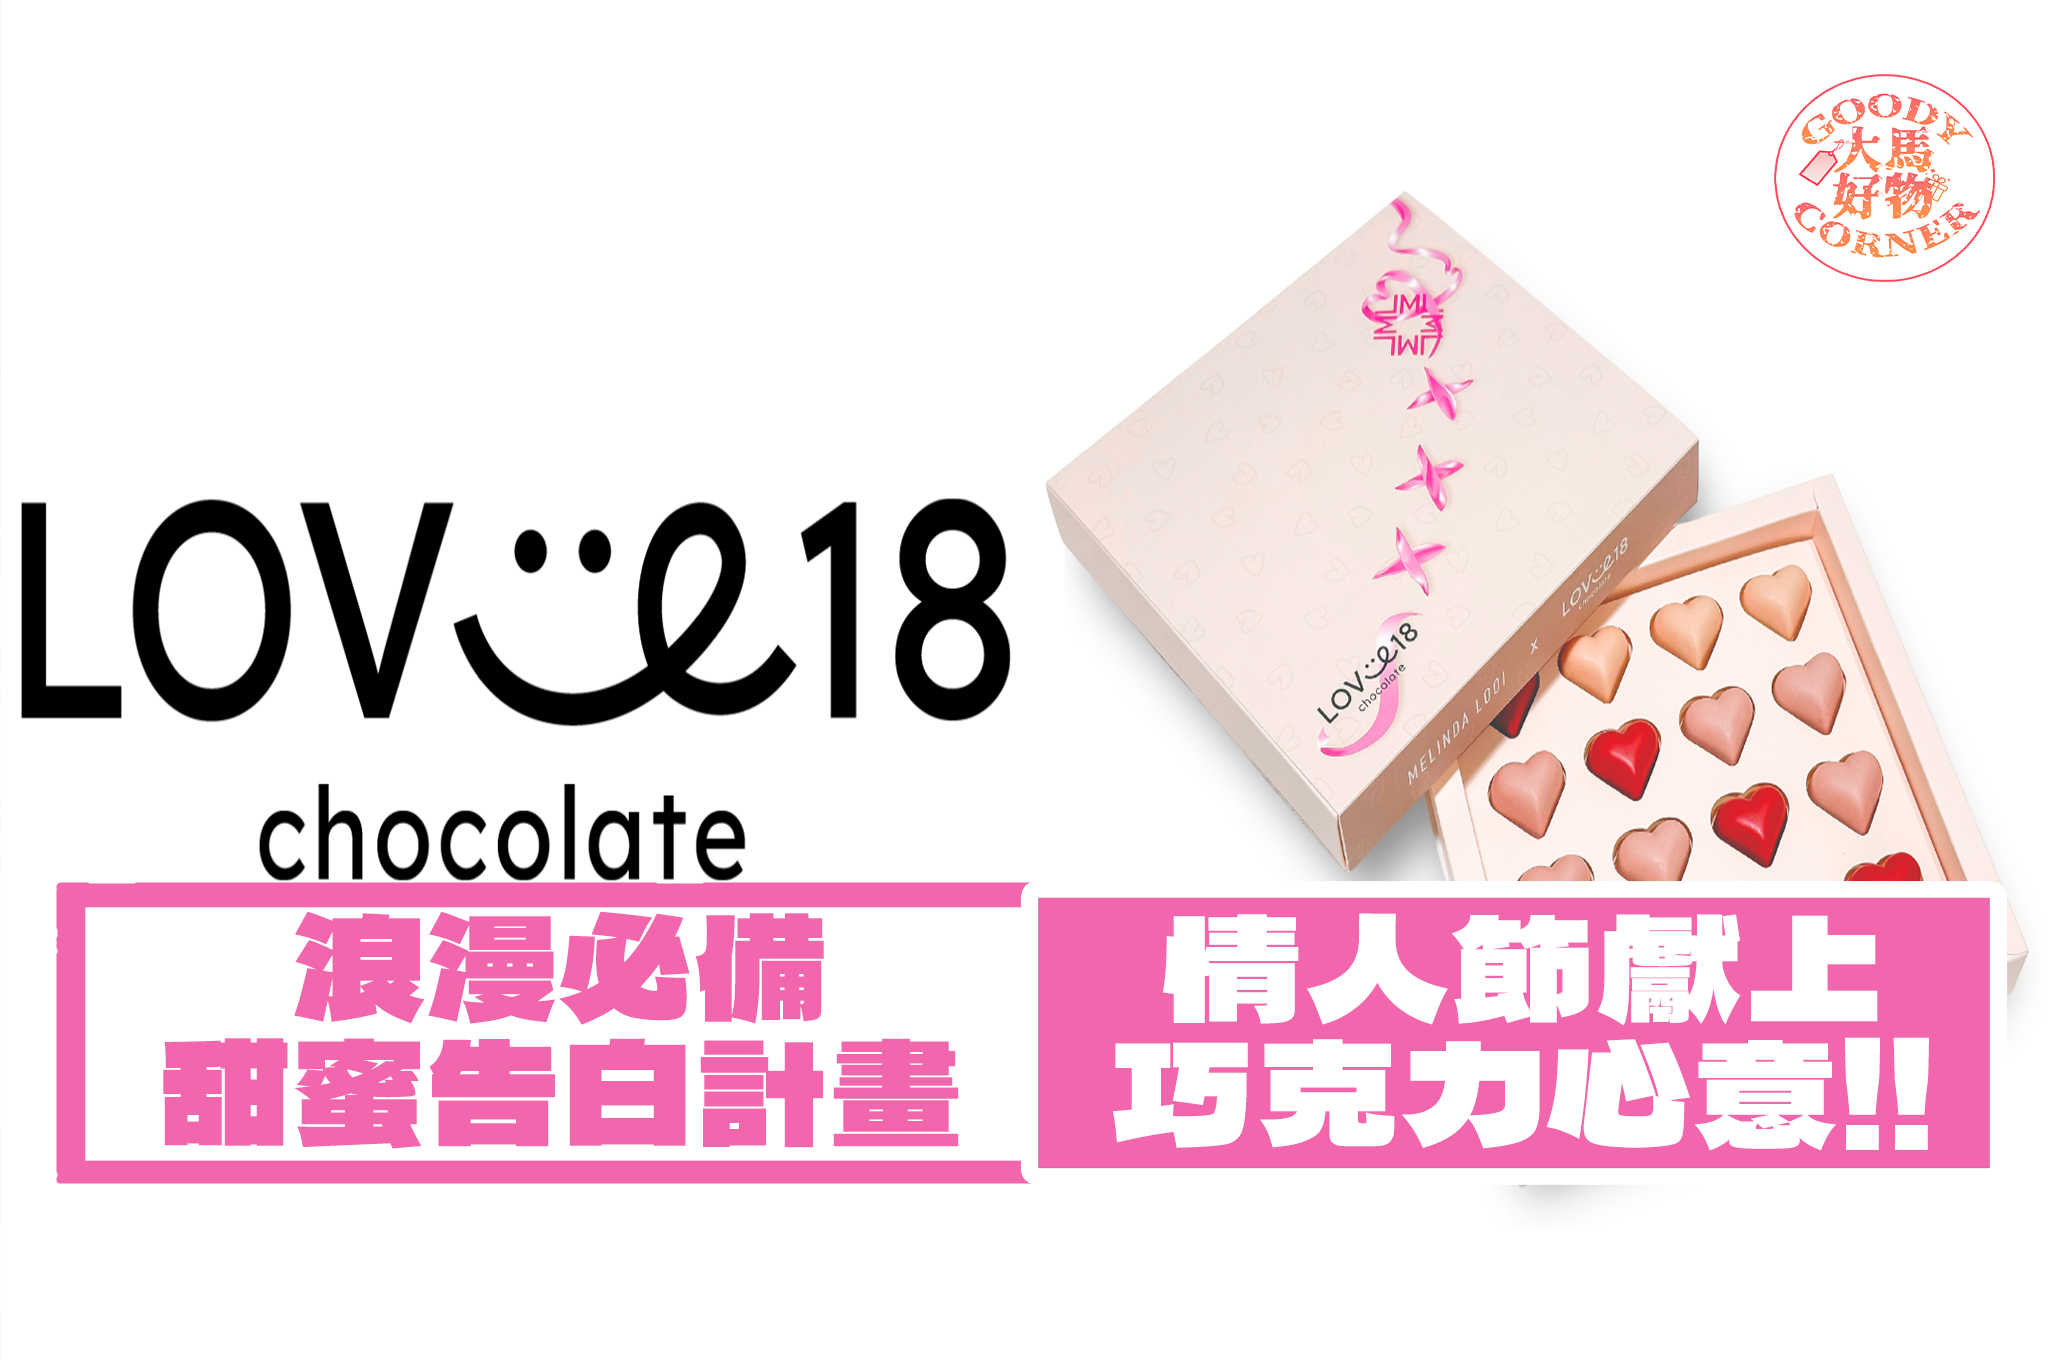 Love18chocolate main